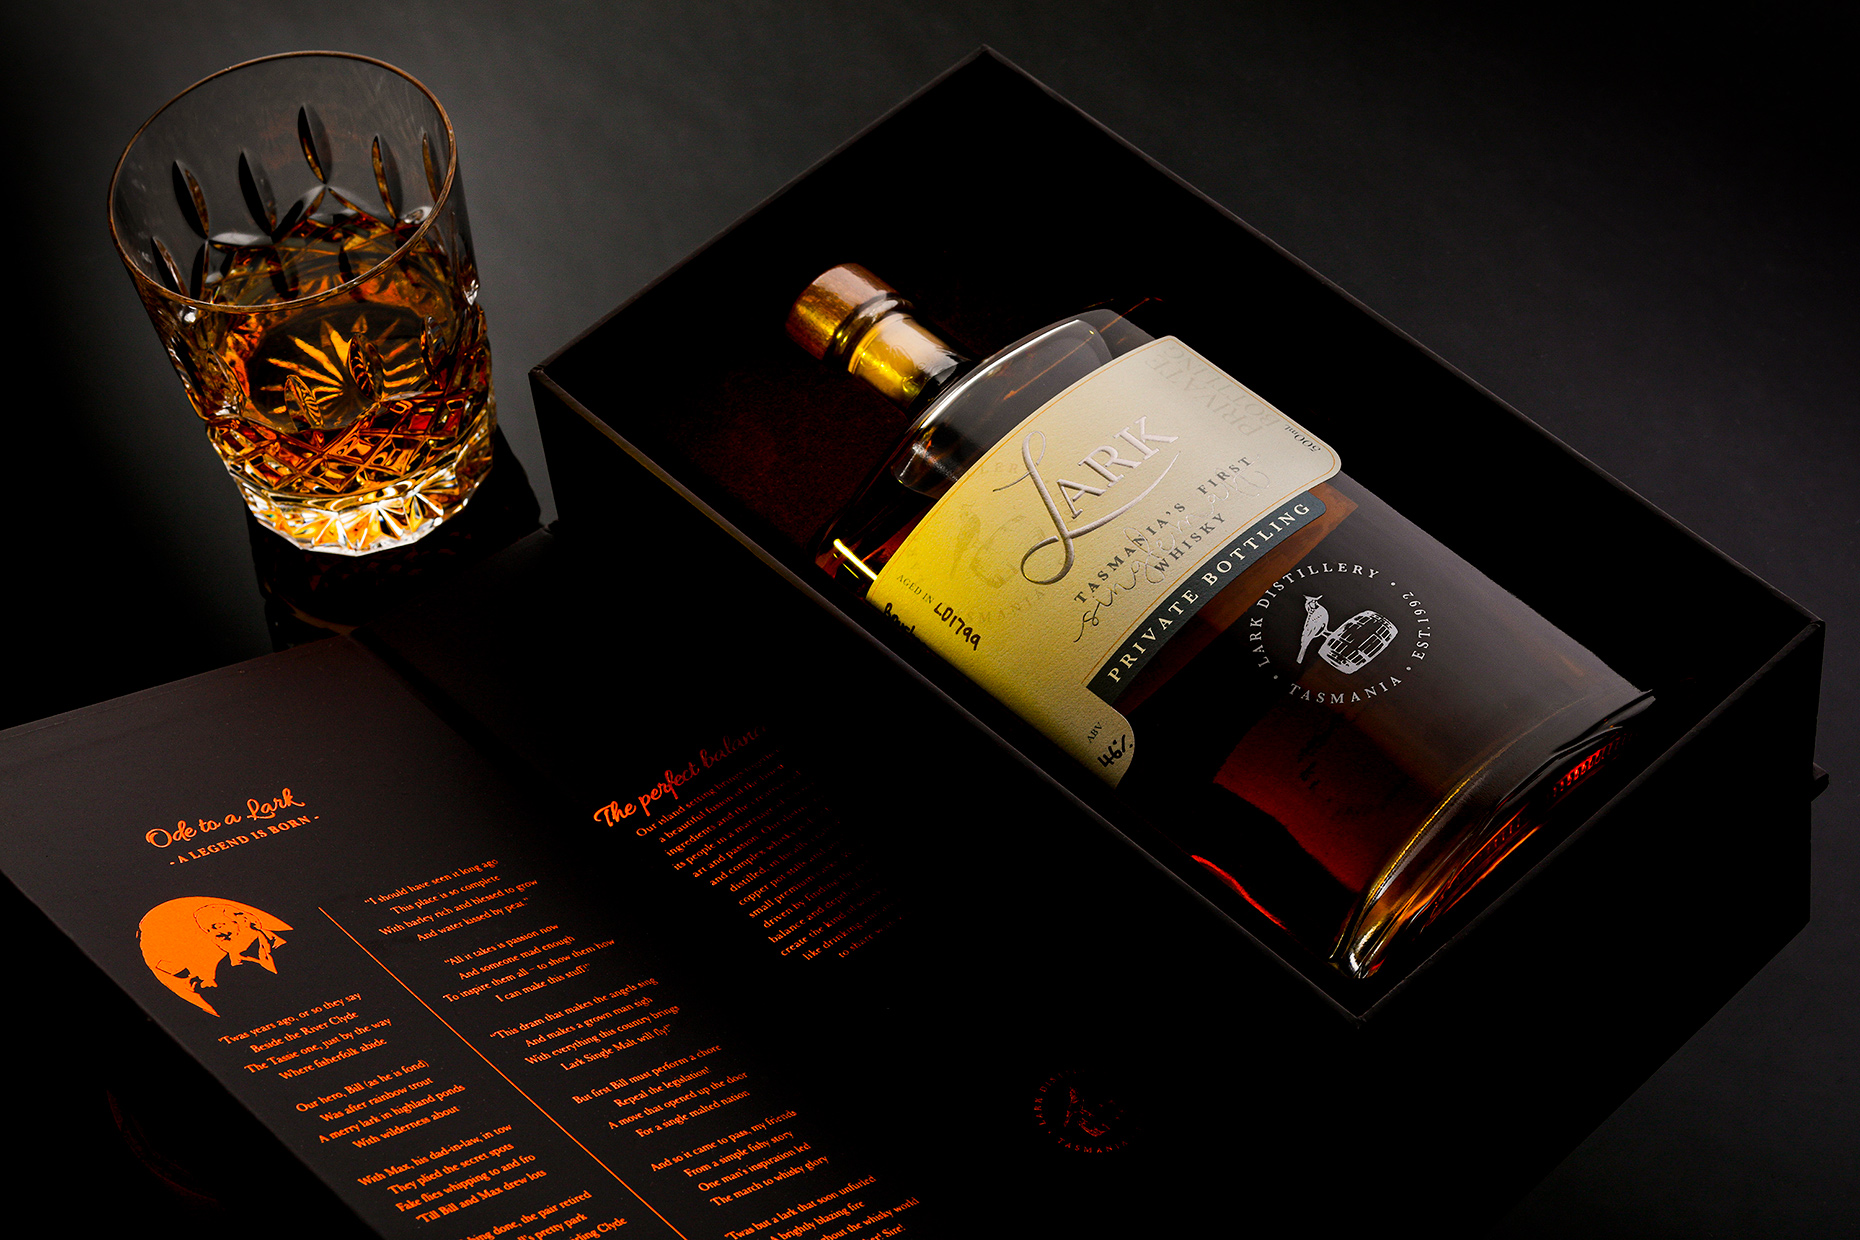 Lark whisky from Tasmania